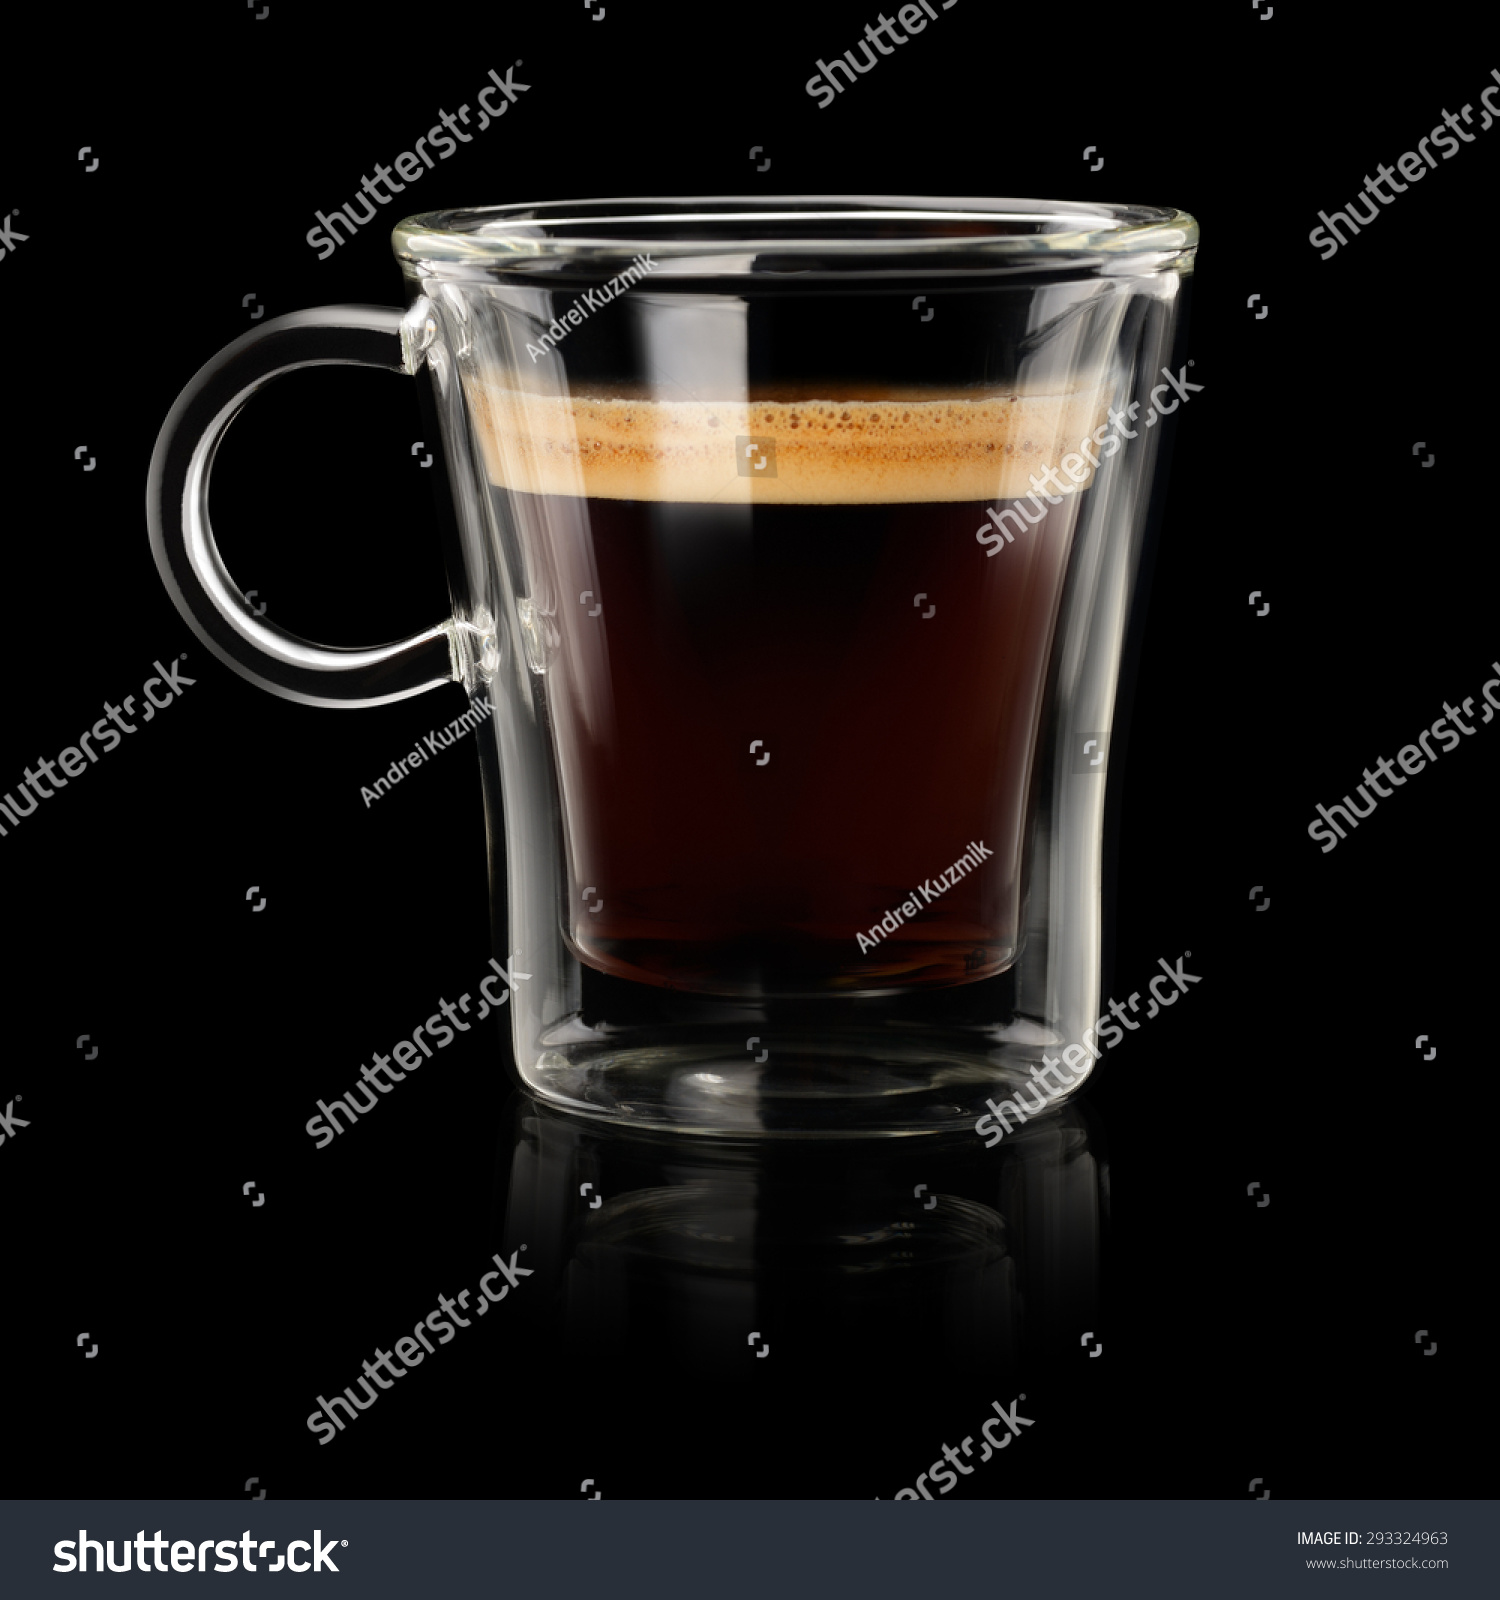 Coffee espresso doppio or lungo in transparent cup on black background #293324963